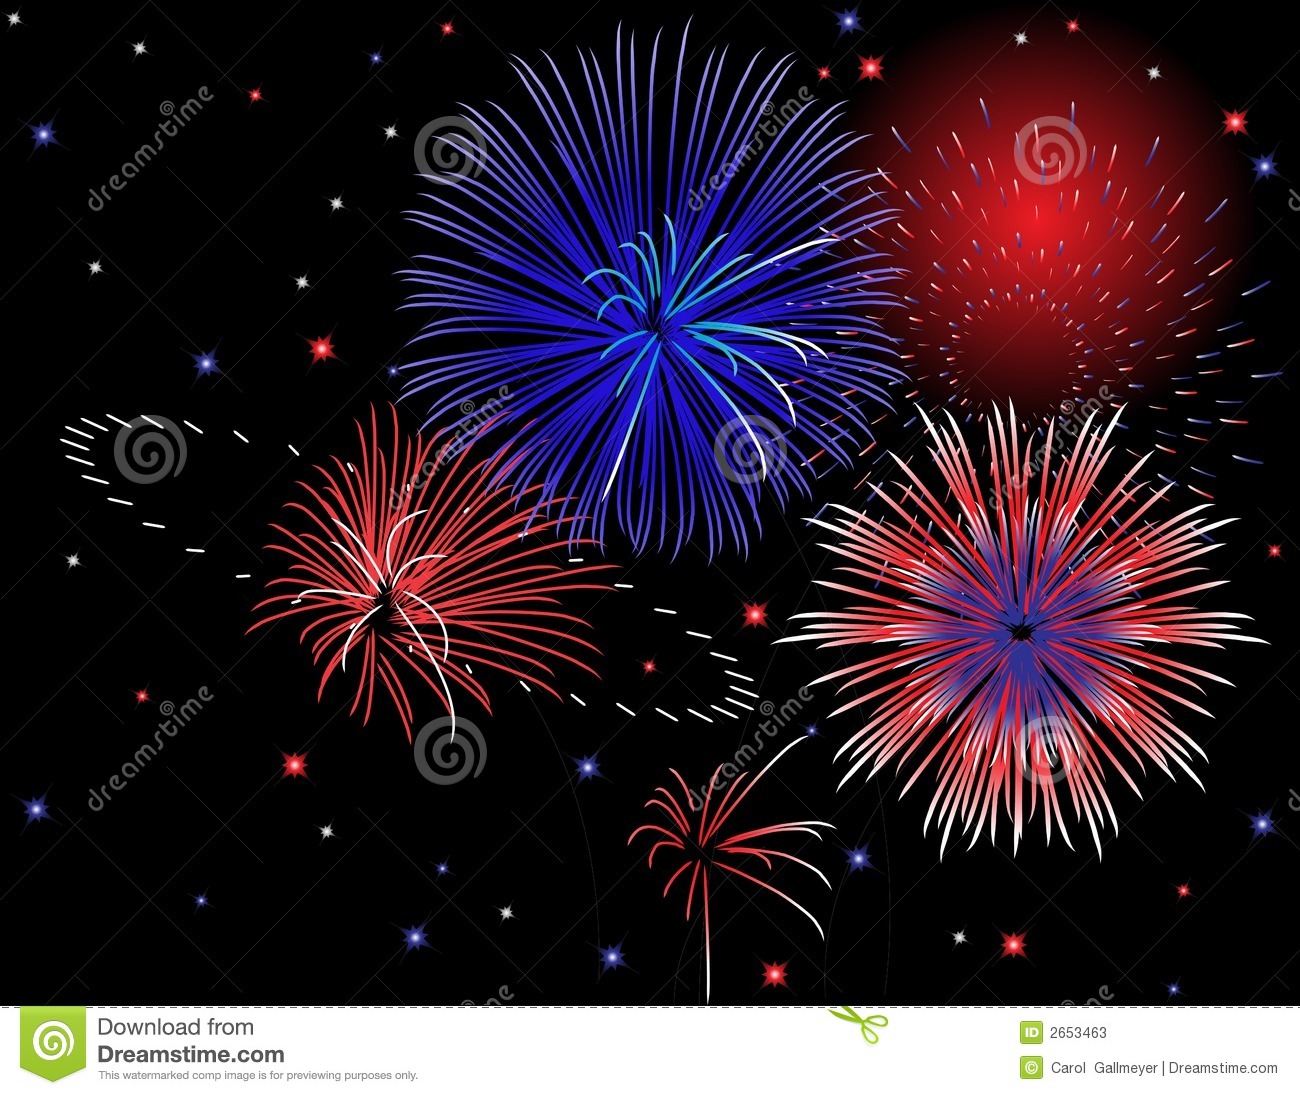 Patriotic Fireworks Clipart